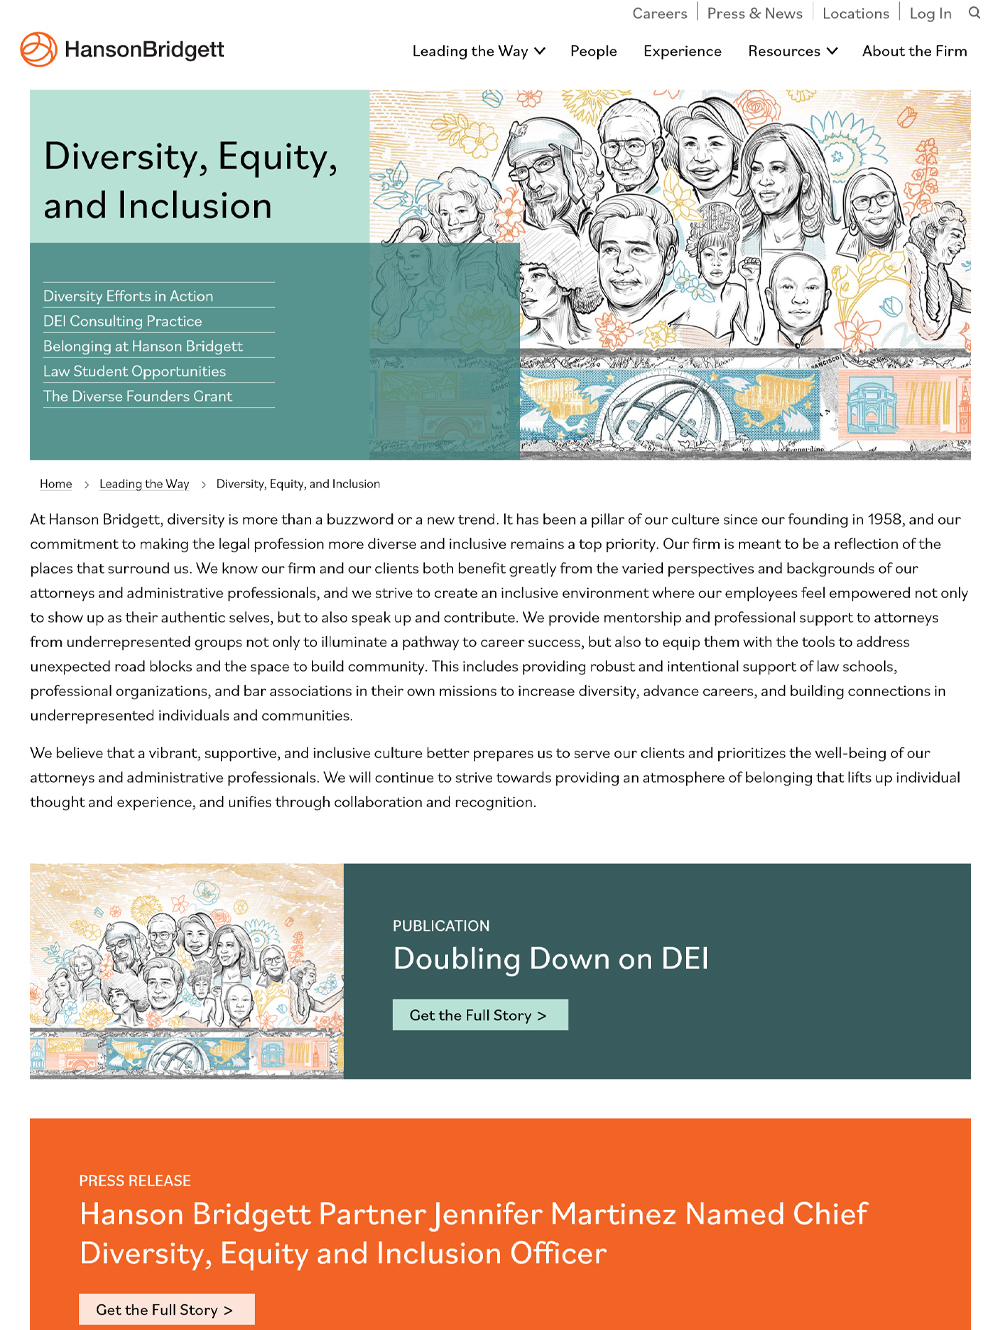 Diversity, Equity & Inclusion hanson